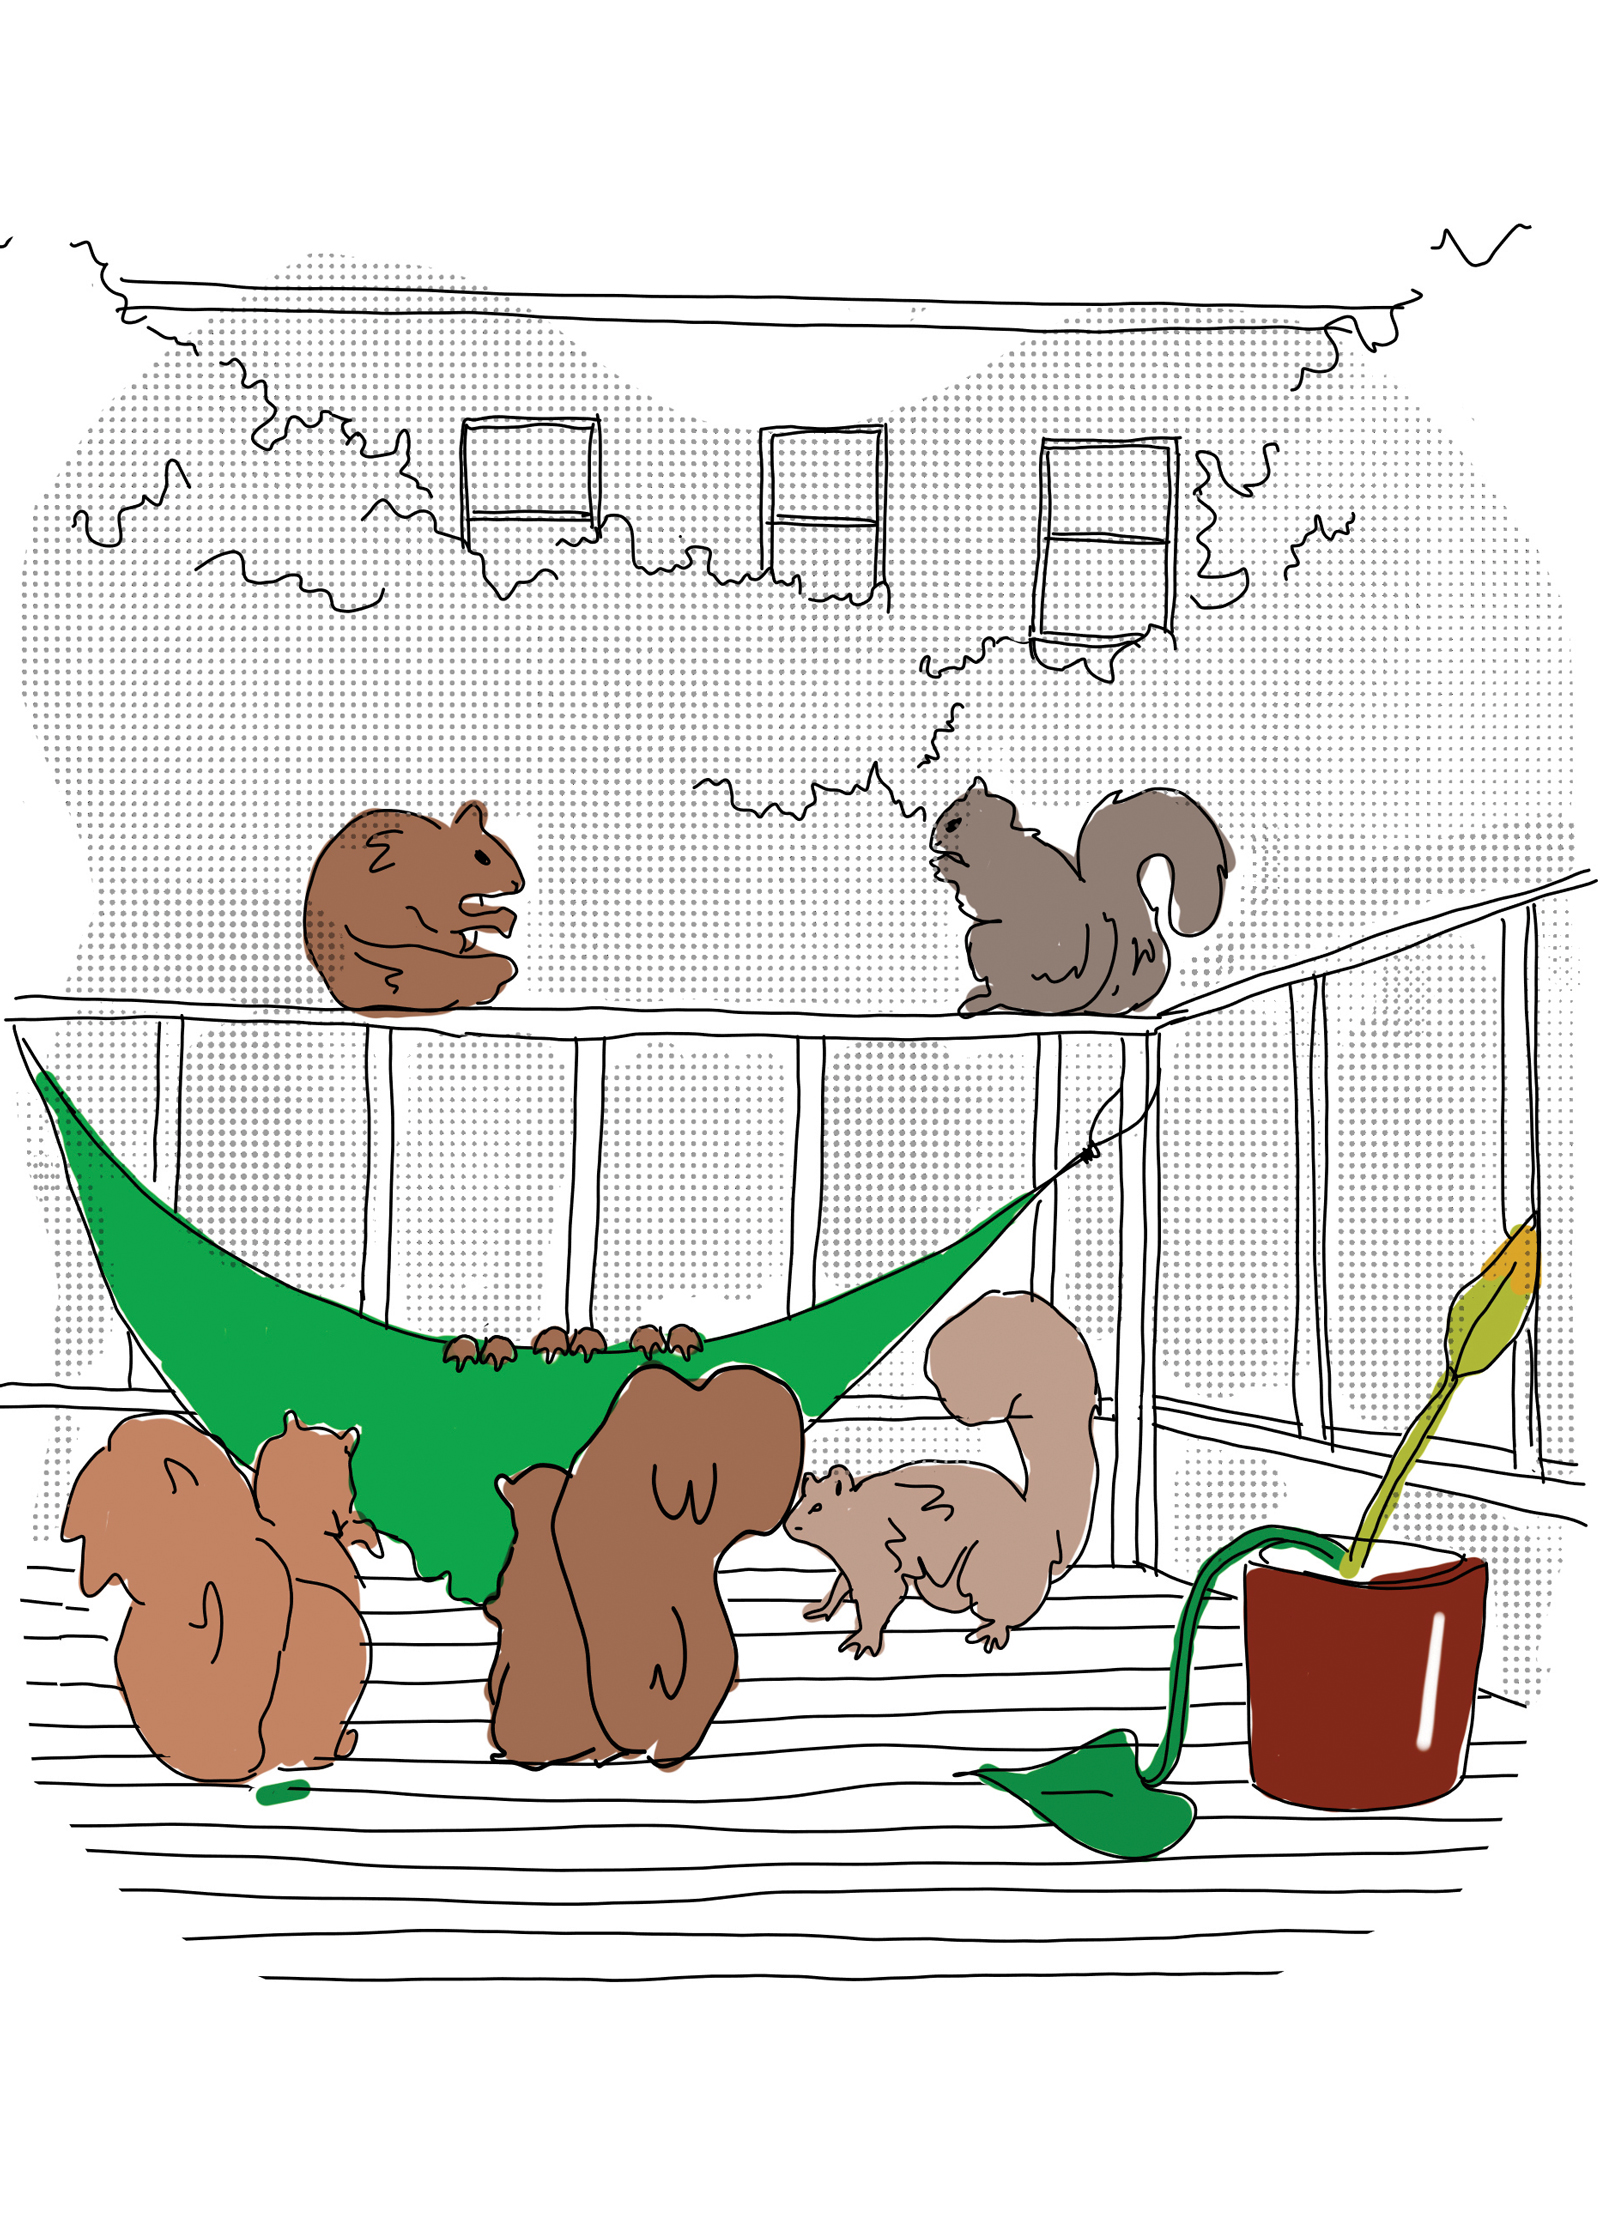 Illustration of squirrels sitting on a hammock 